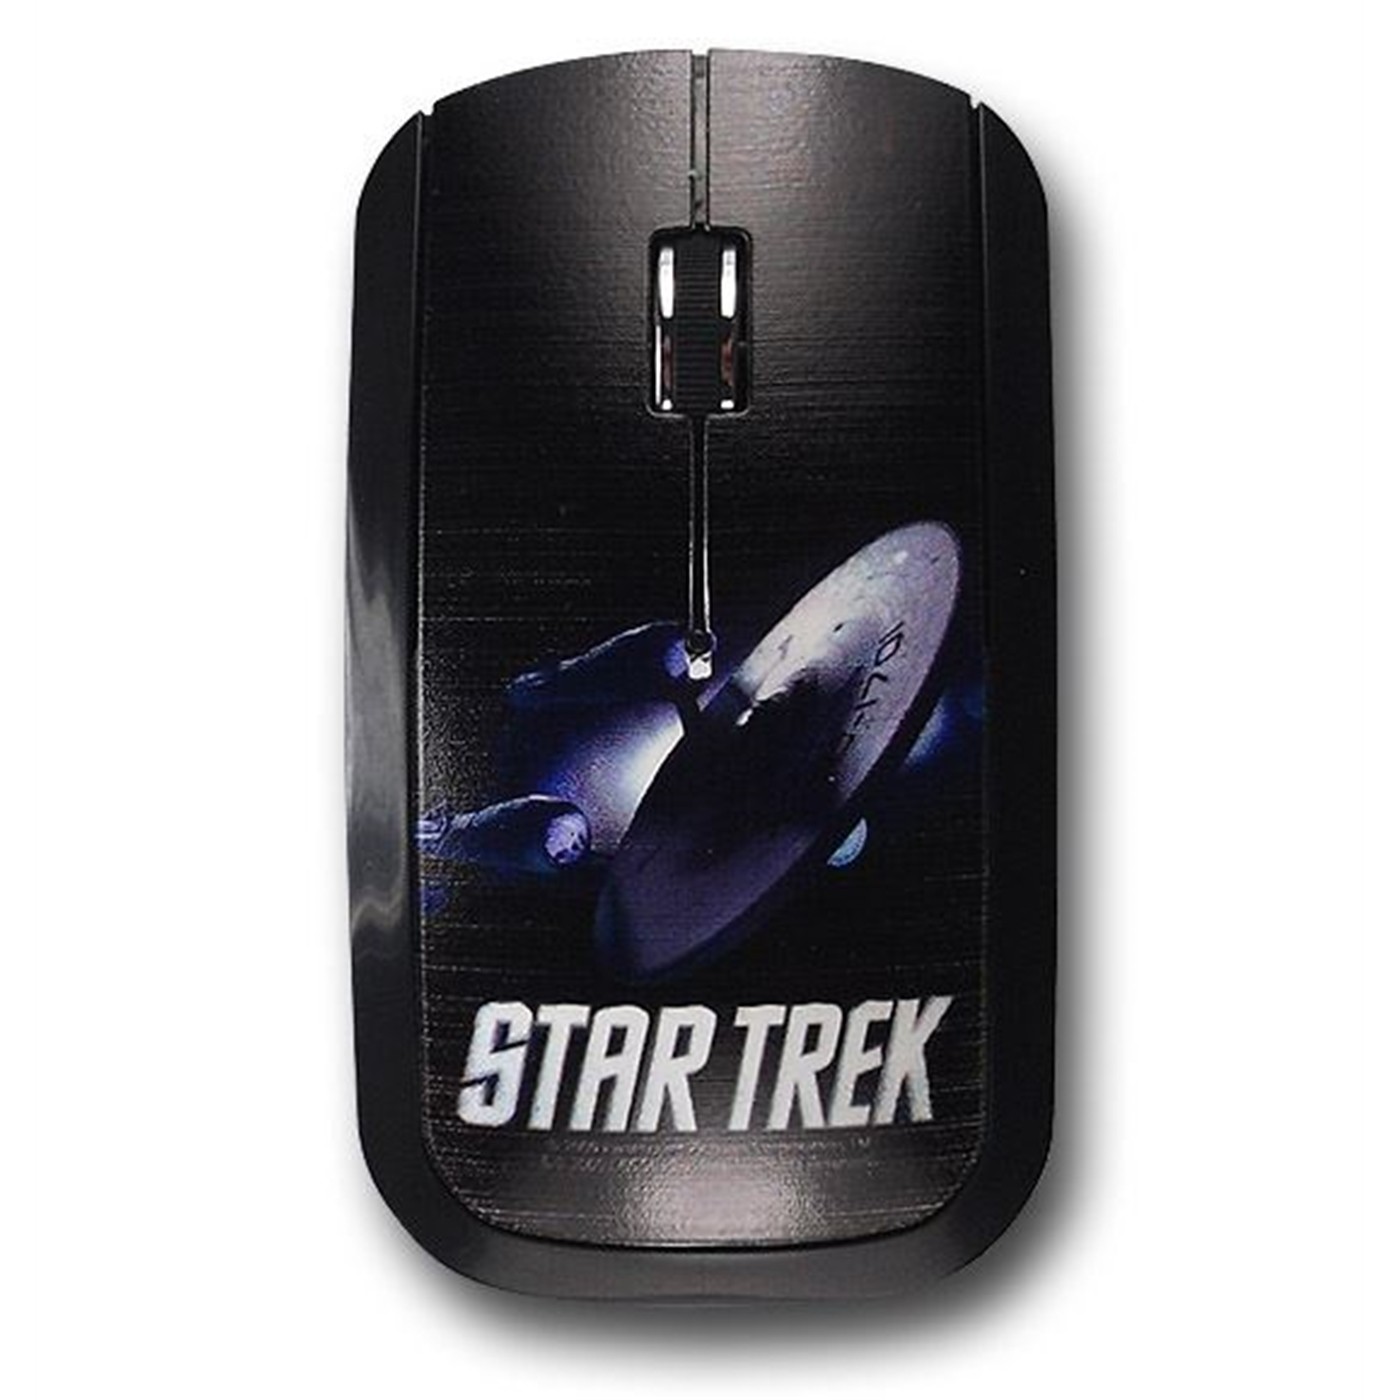 Star Trek Enterprise Wireless Mouse